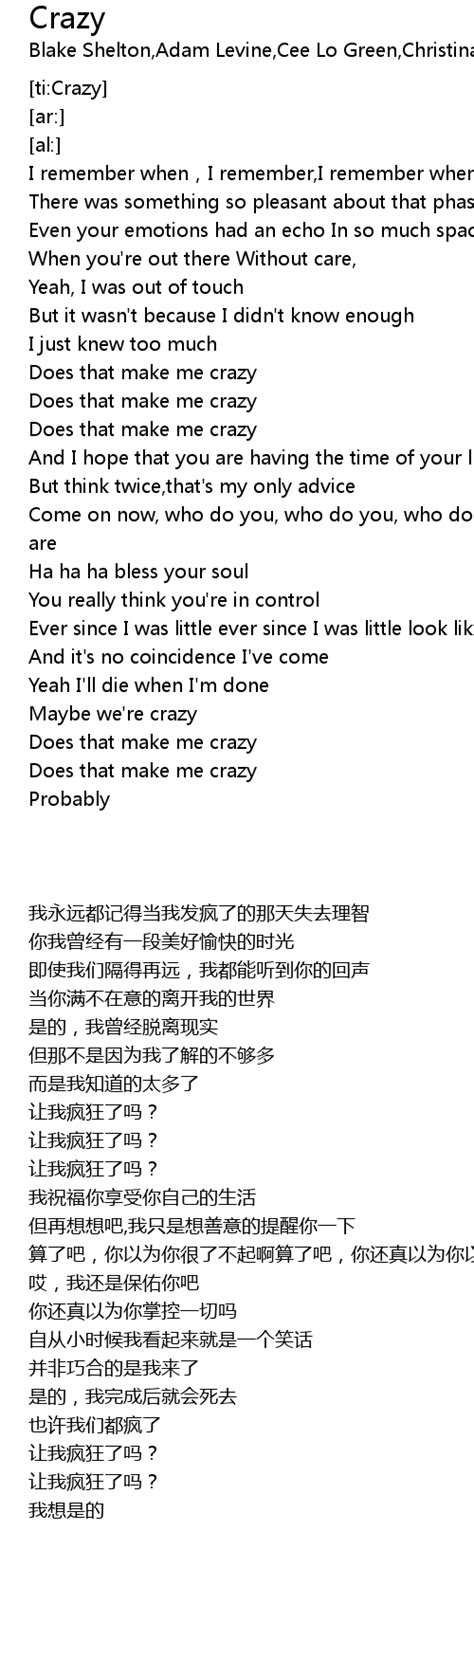 crazy lyrics follow lyrics